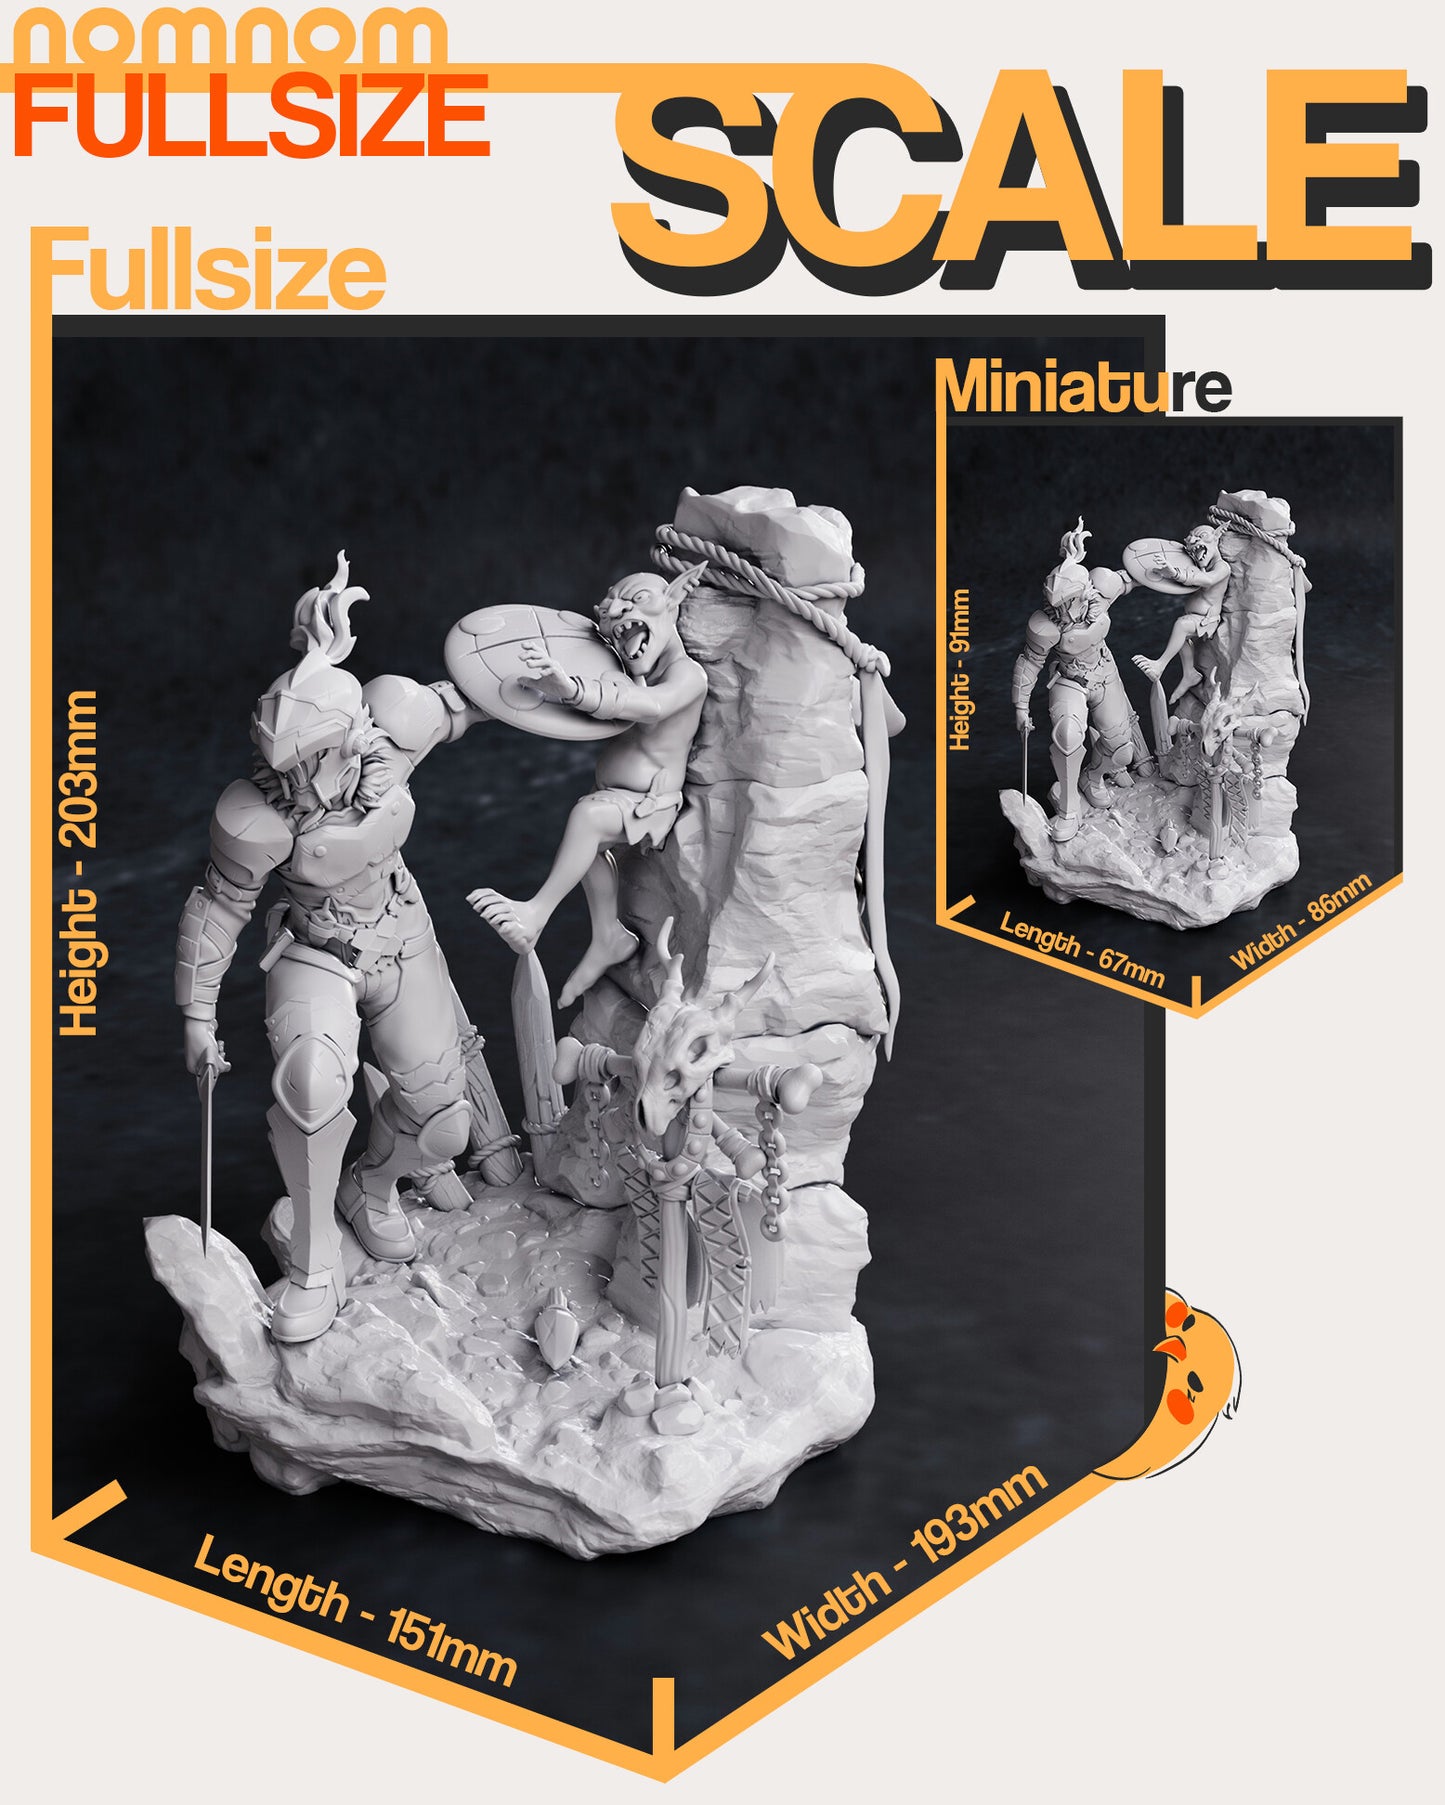 Orcbolg - Goblin Slayer 3D Printed Fanmade Model by Nomnom Figures